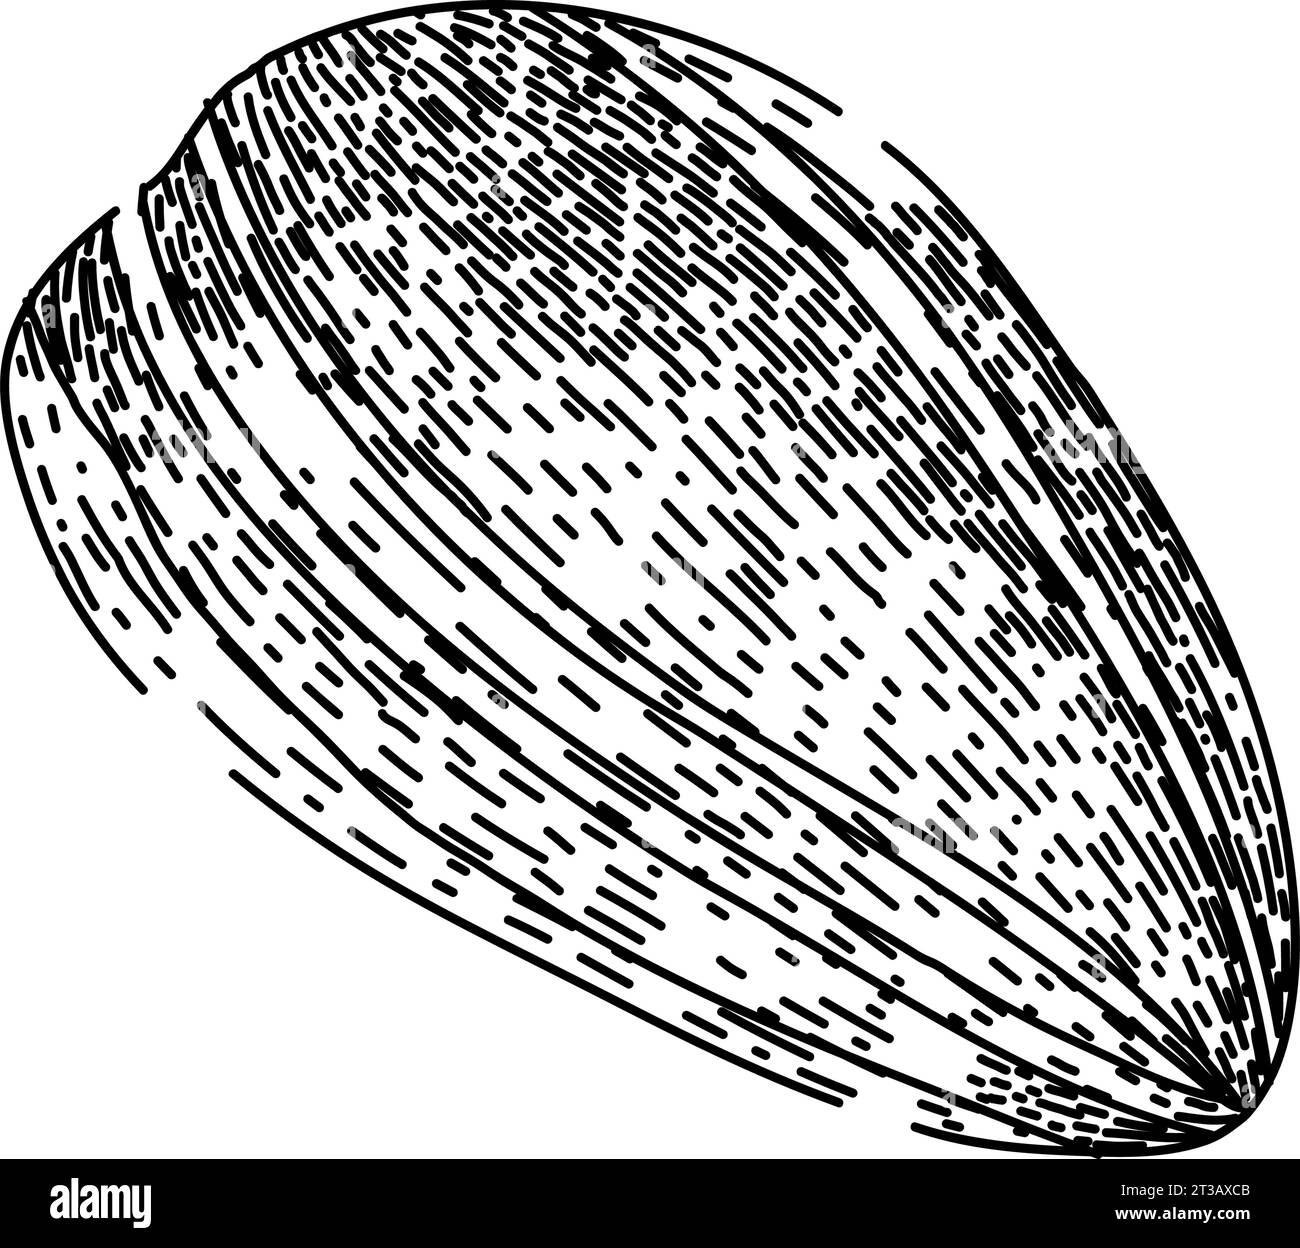 grain sunflower seed sketch hand drawn vector Stock Vector